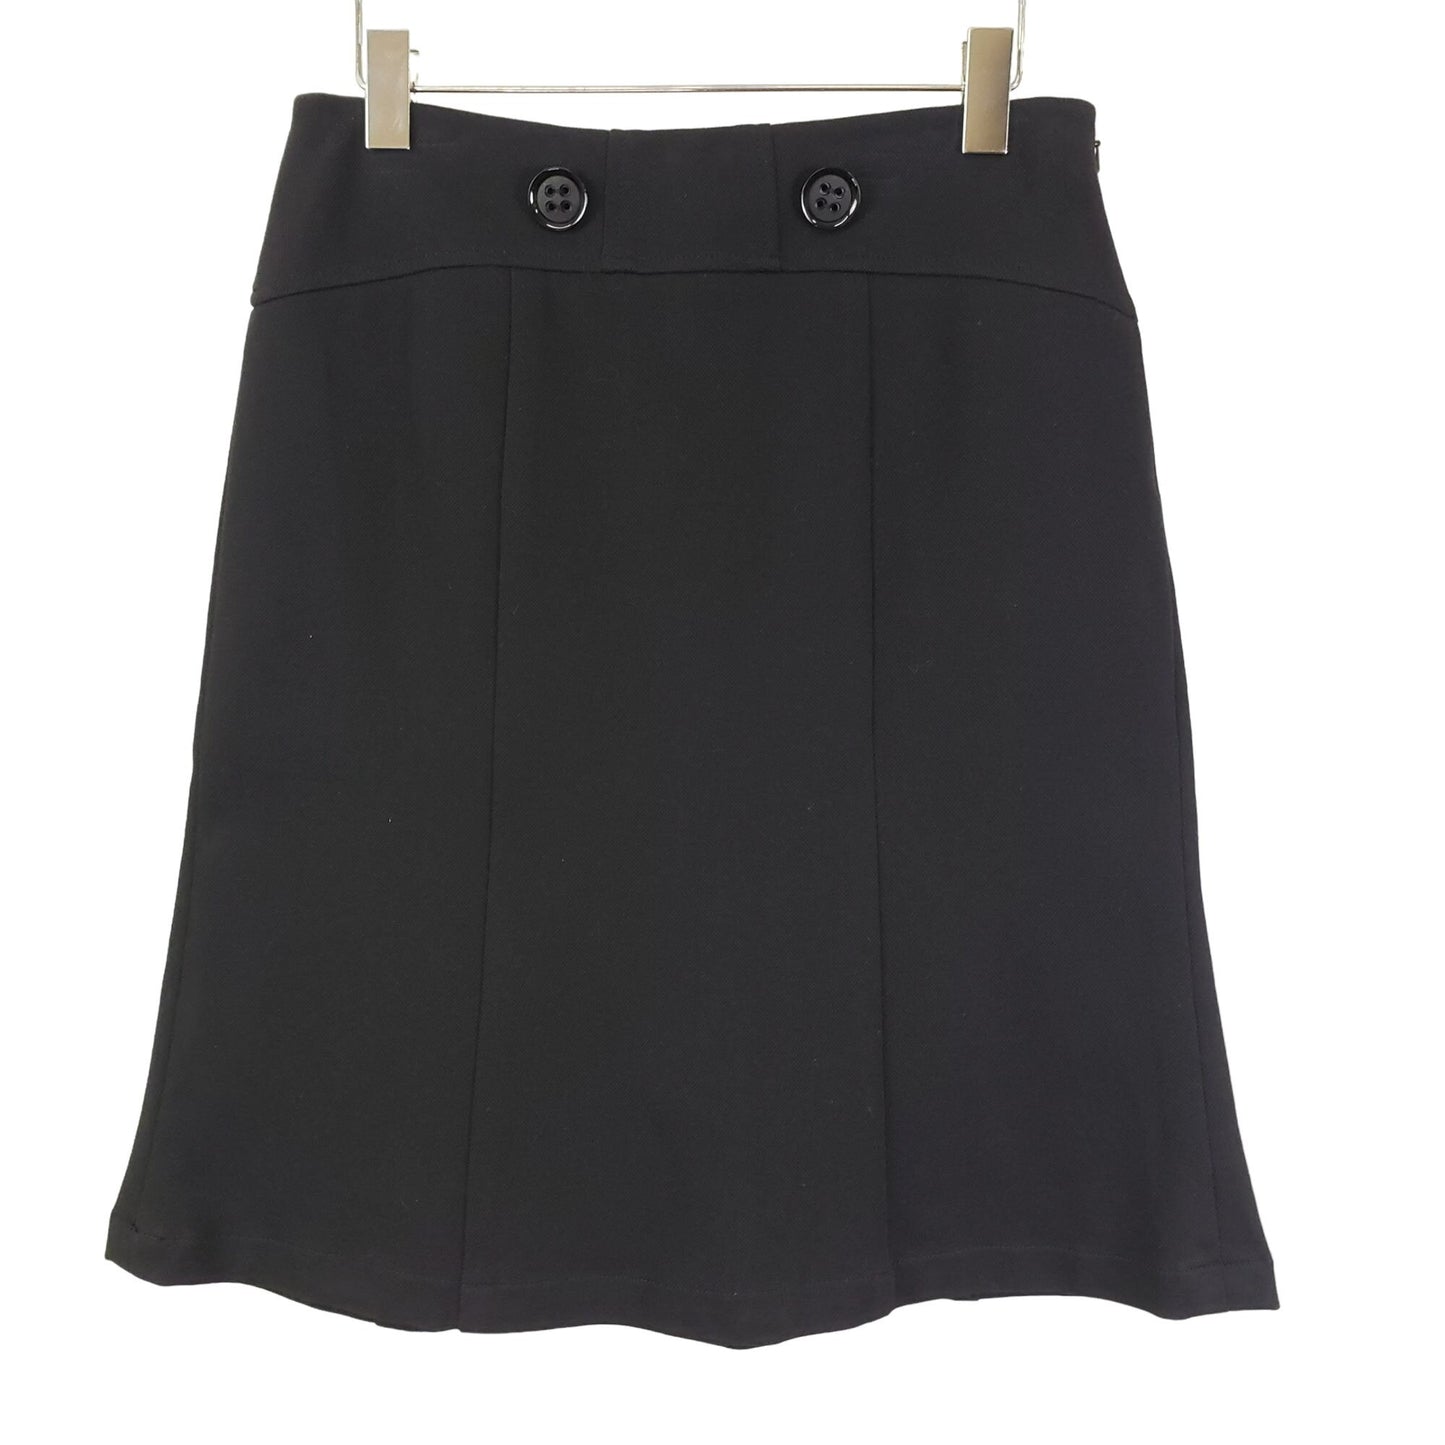 Etcetera Textured Flare Hem Pencil Skirt Size 6